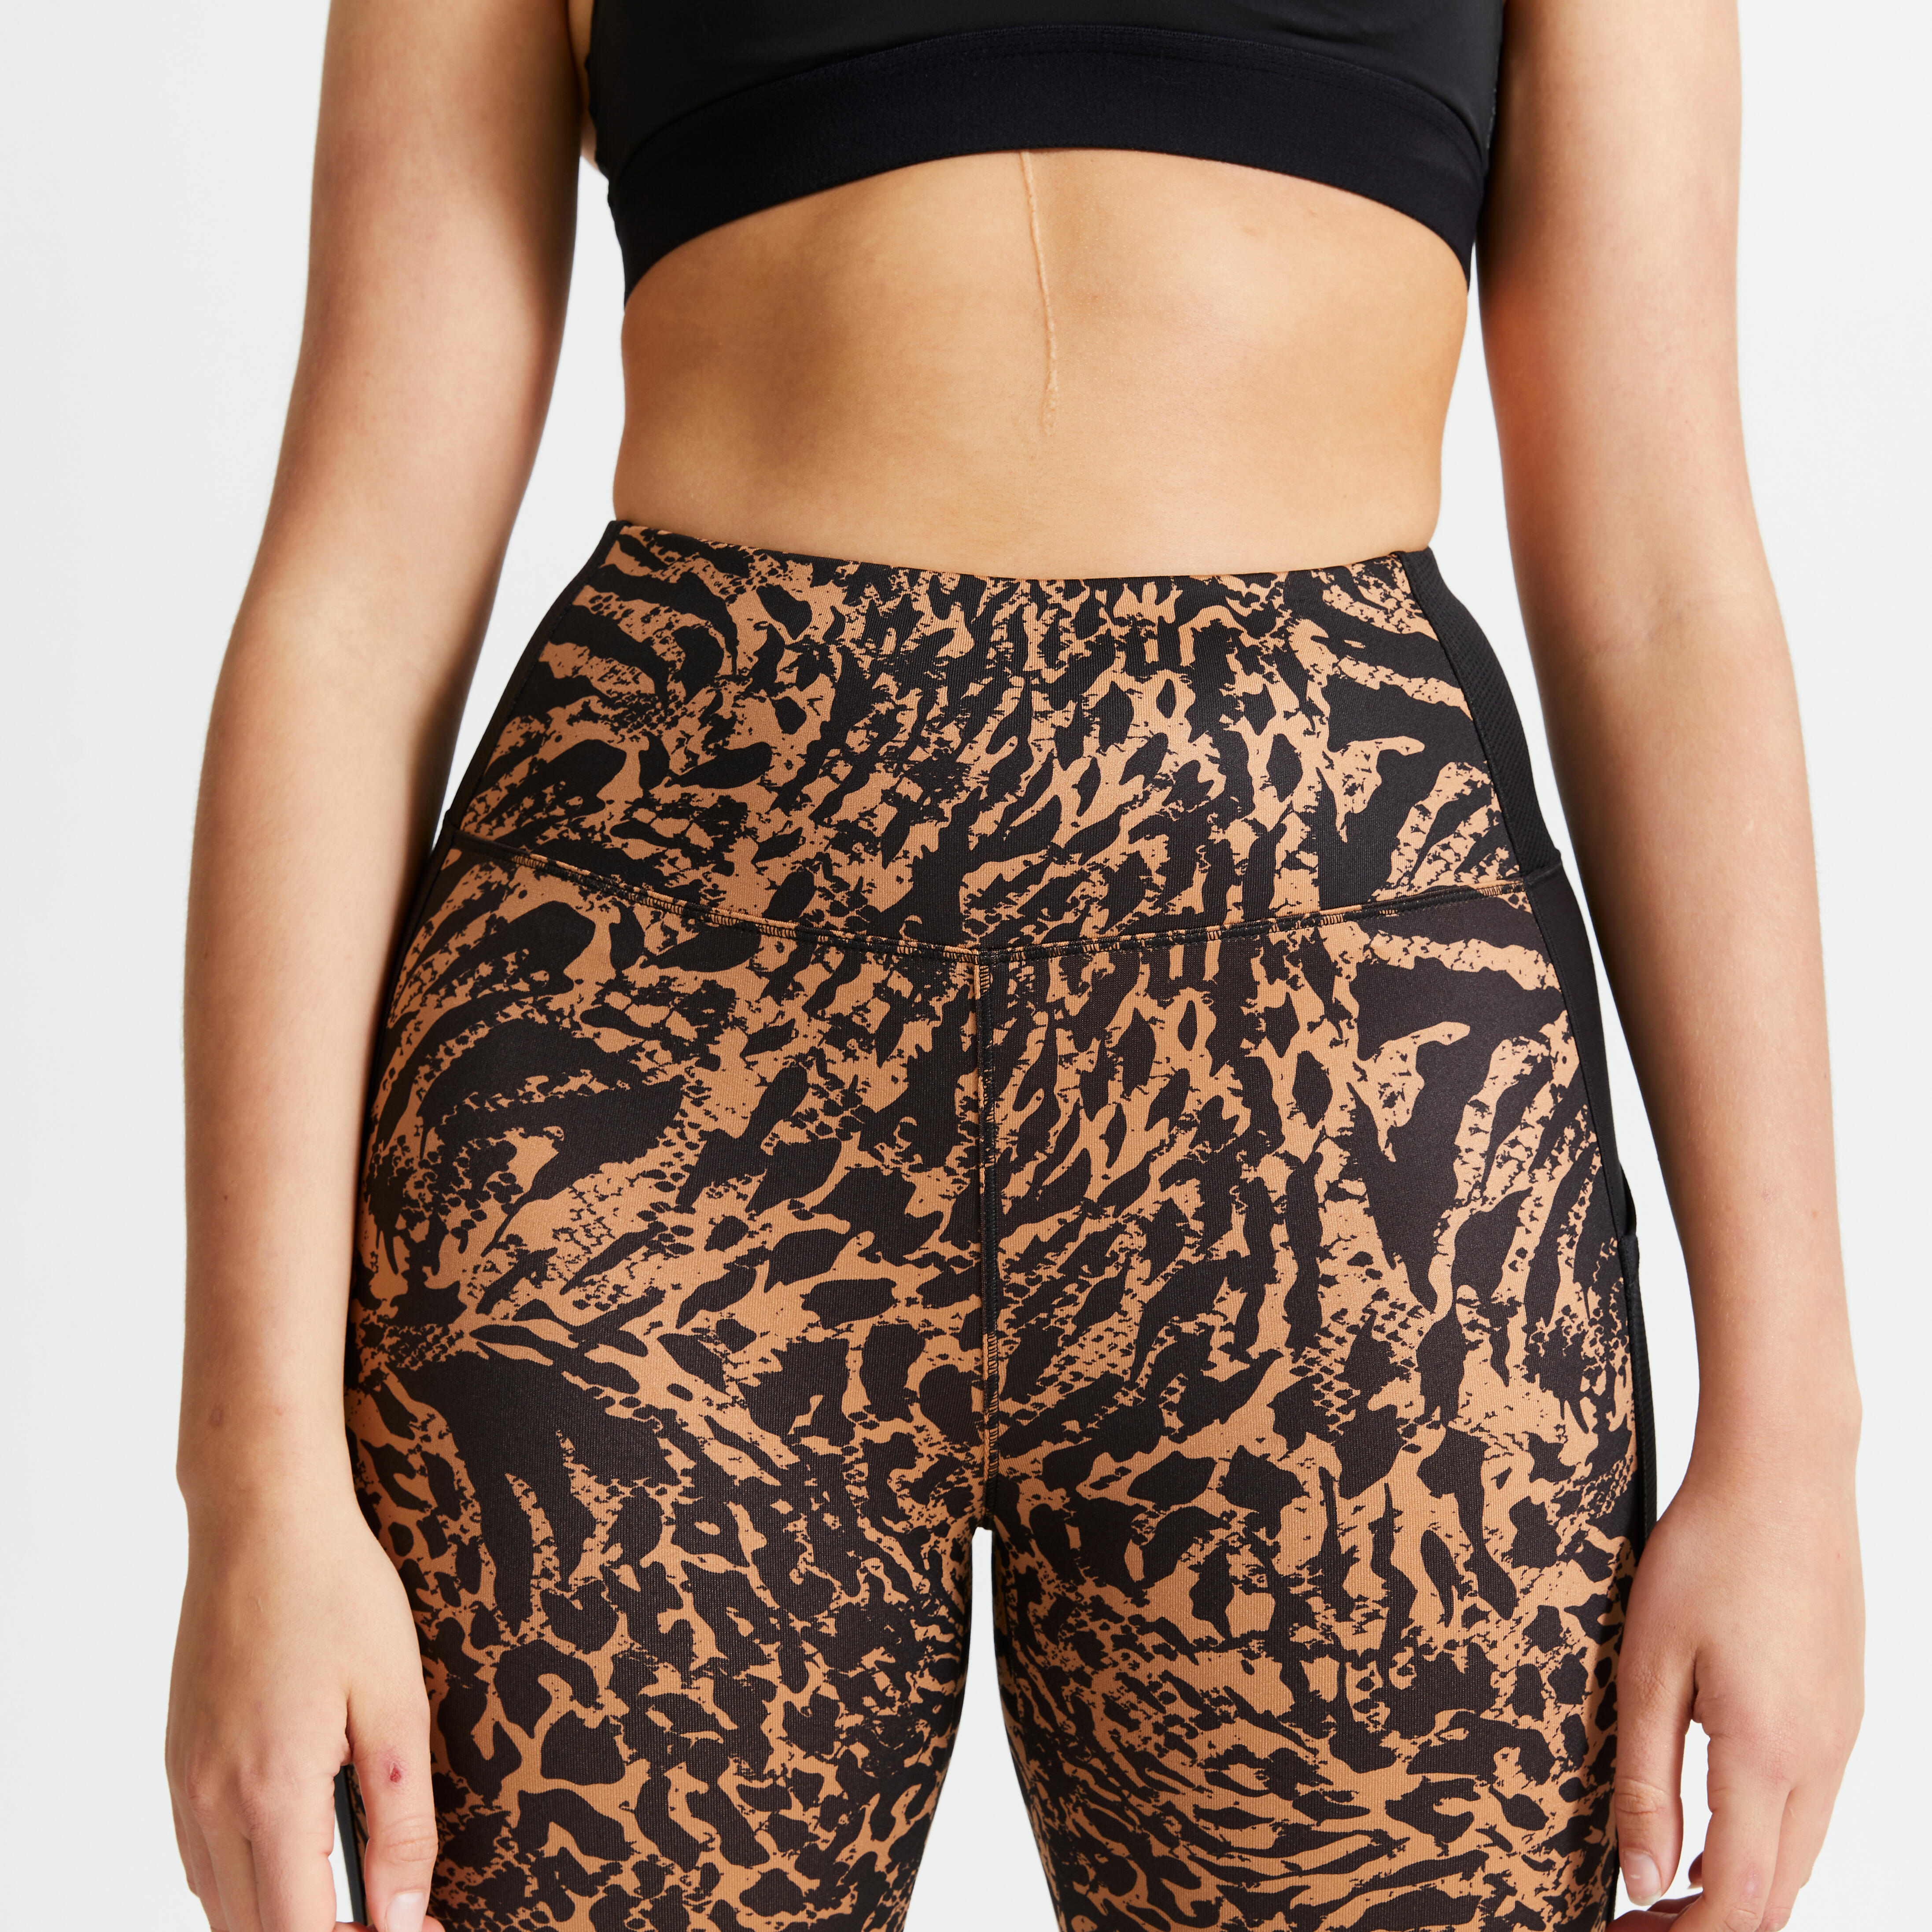 Jacquard legging with leopard motif - Black / Copper - Redsware